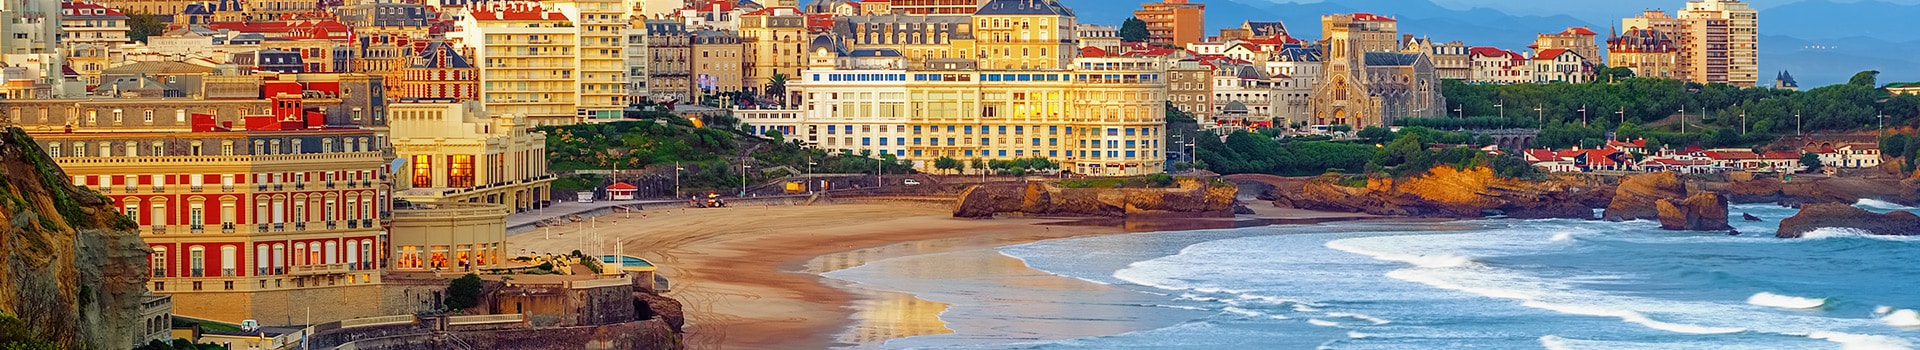 Costa del Sol - Biarritz-Anglet-Bayonne